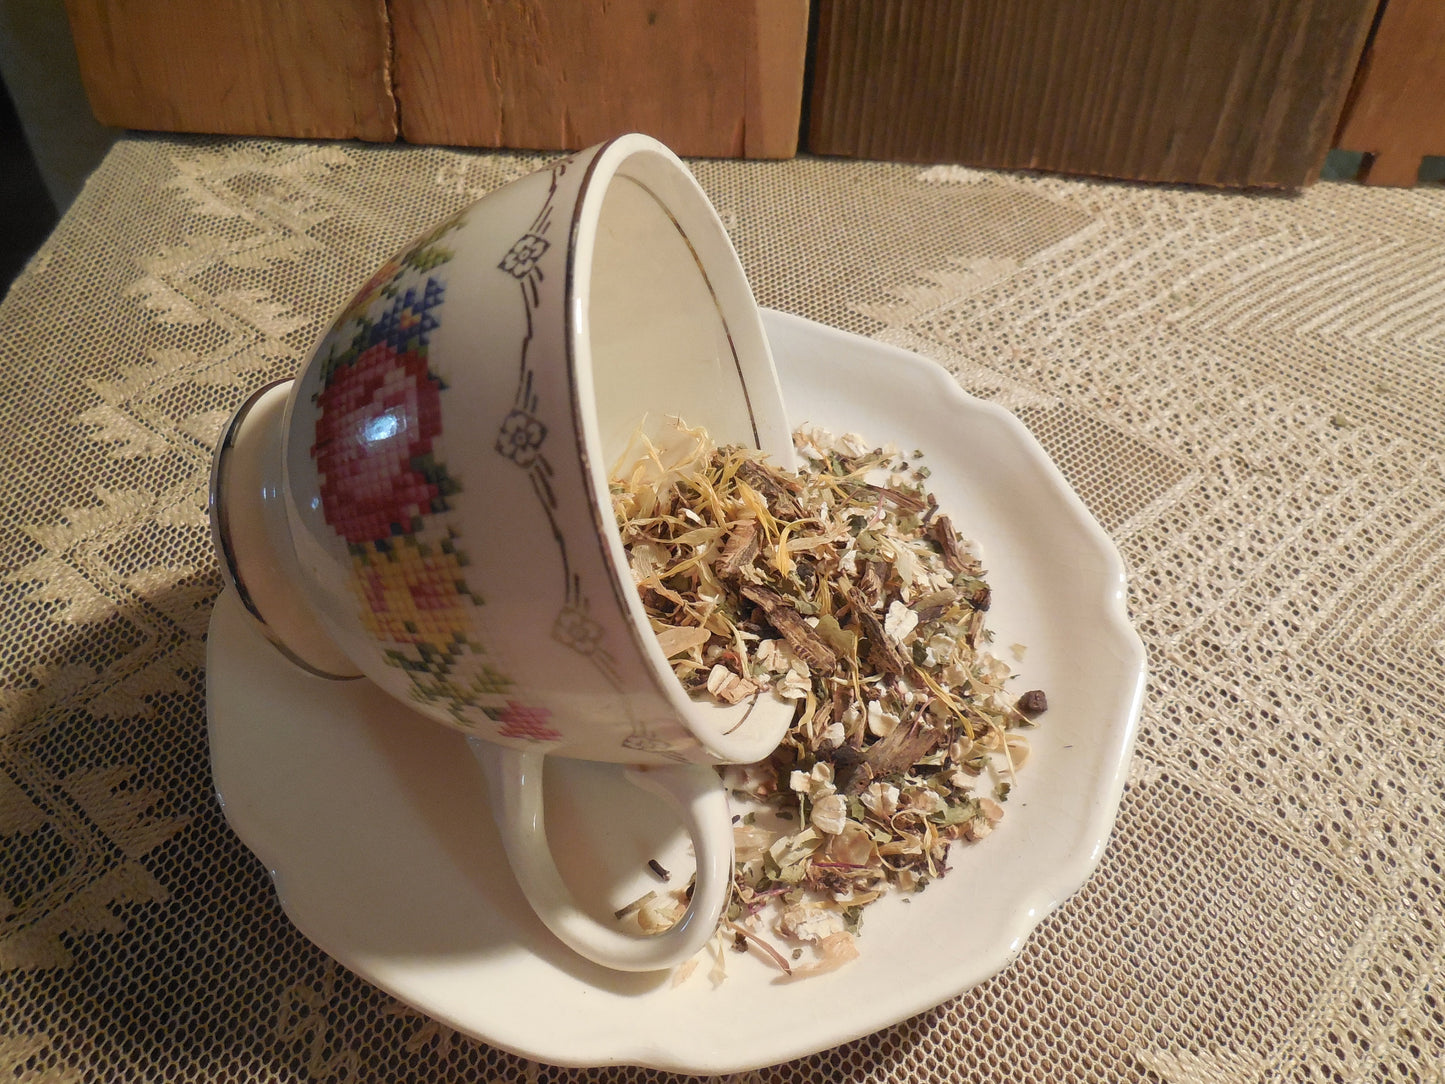 Menopause Women's Loose Herbal Tea, no caffeine, Black cohosh, hops, oats,